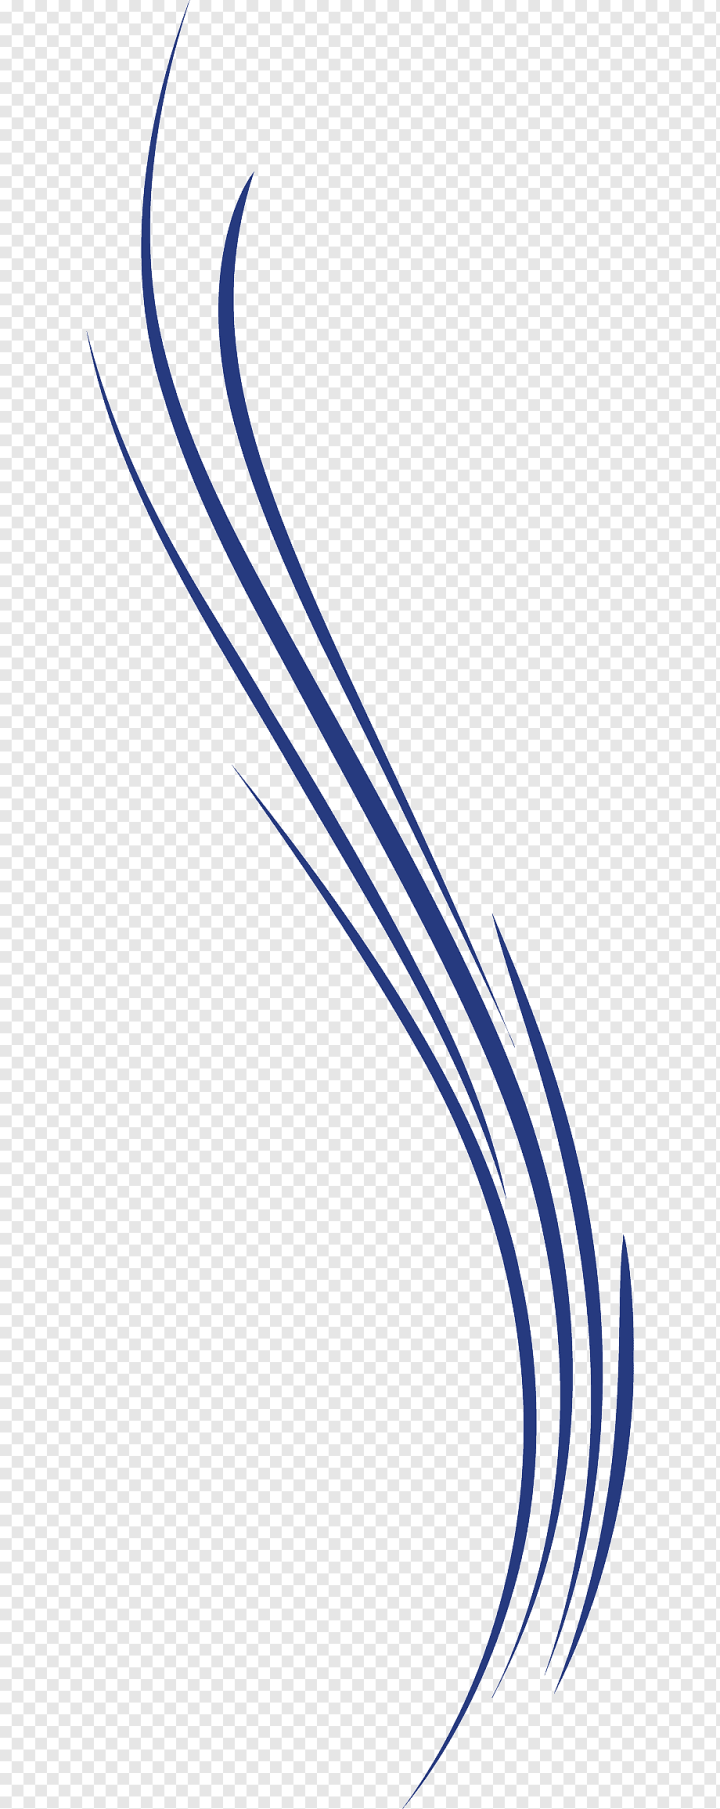 Free: Curve Line Euclidean, Blue curve, blue curved slash